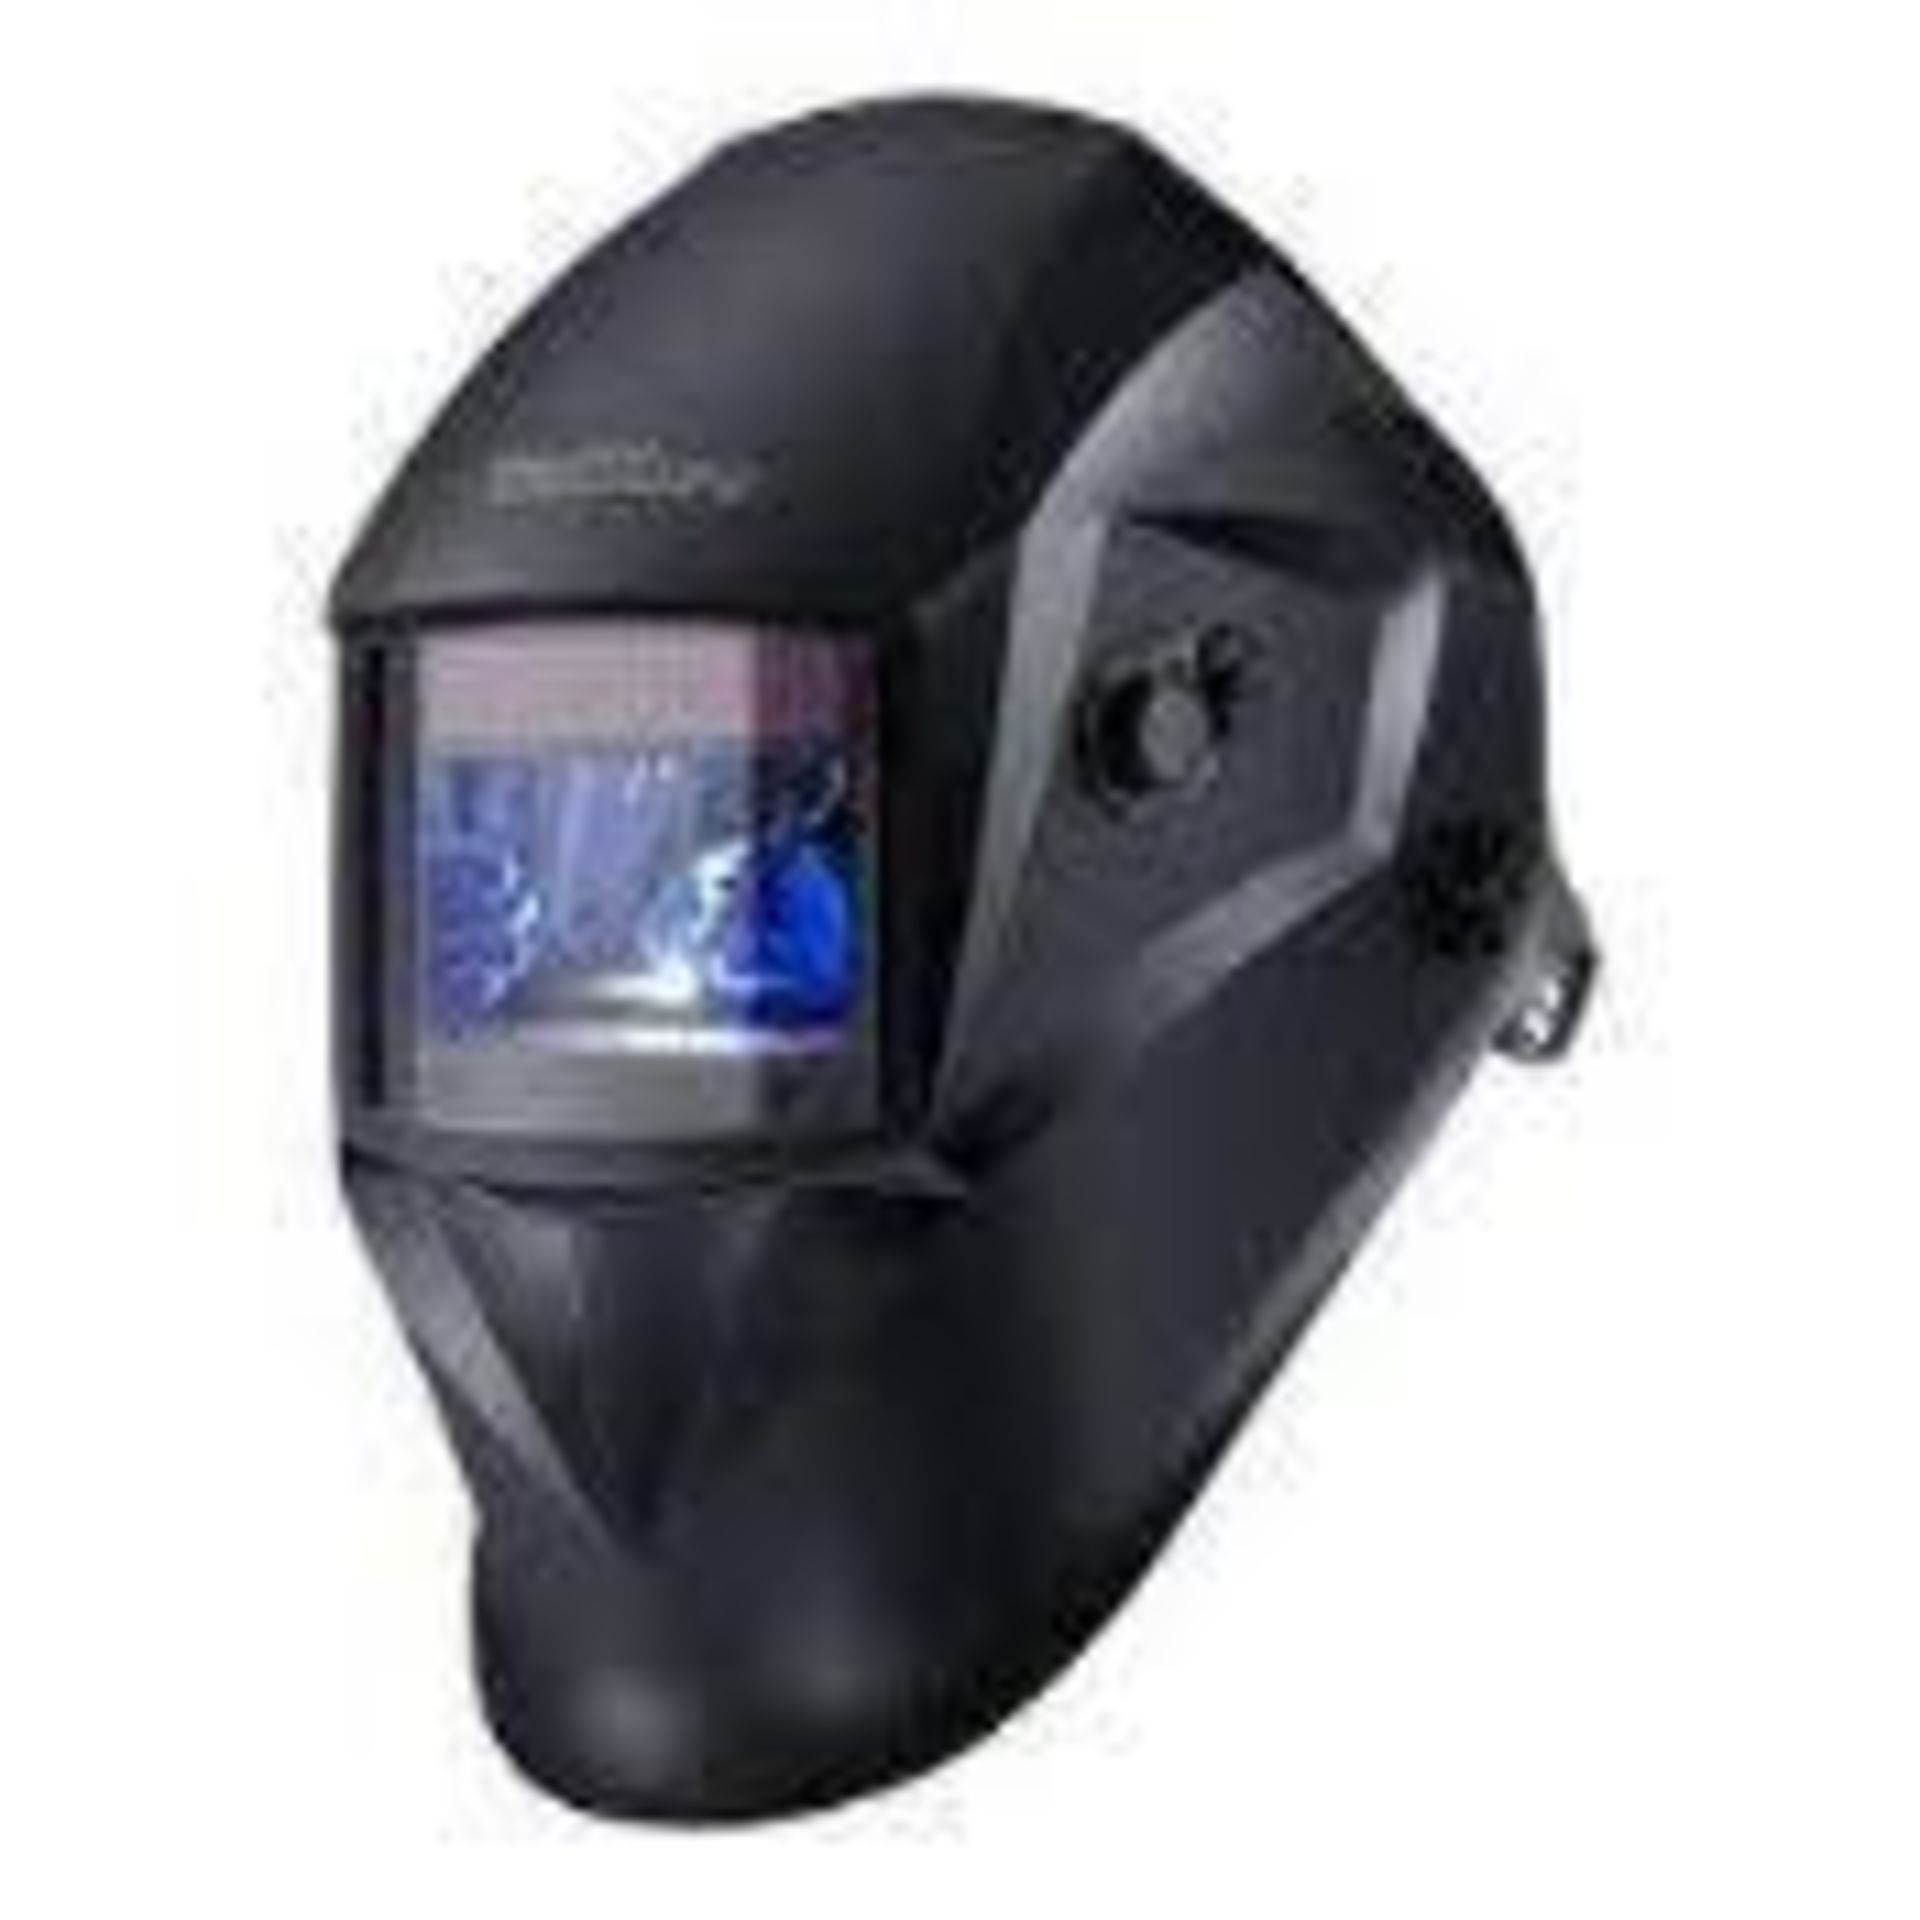 2 x NEW BOXED TackLife Auto Darkening Welding Helmet Black. TKMZO1HD. (ROW12MID) - Image 2 of 2